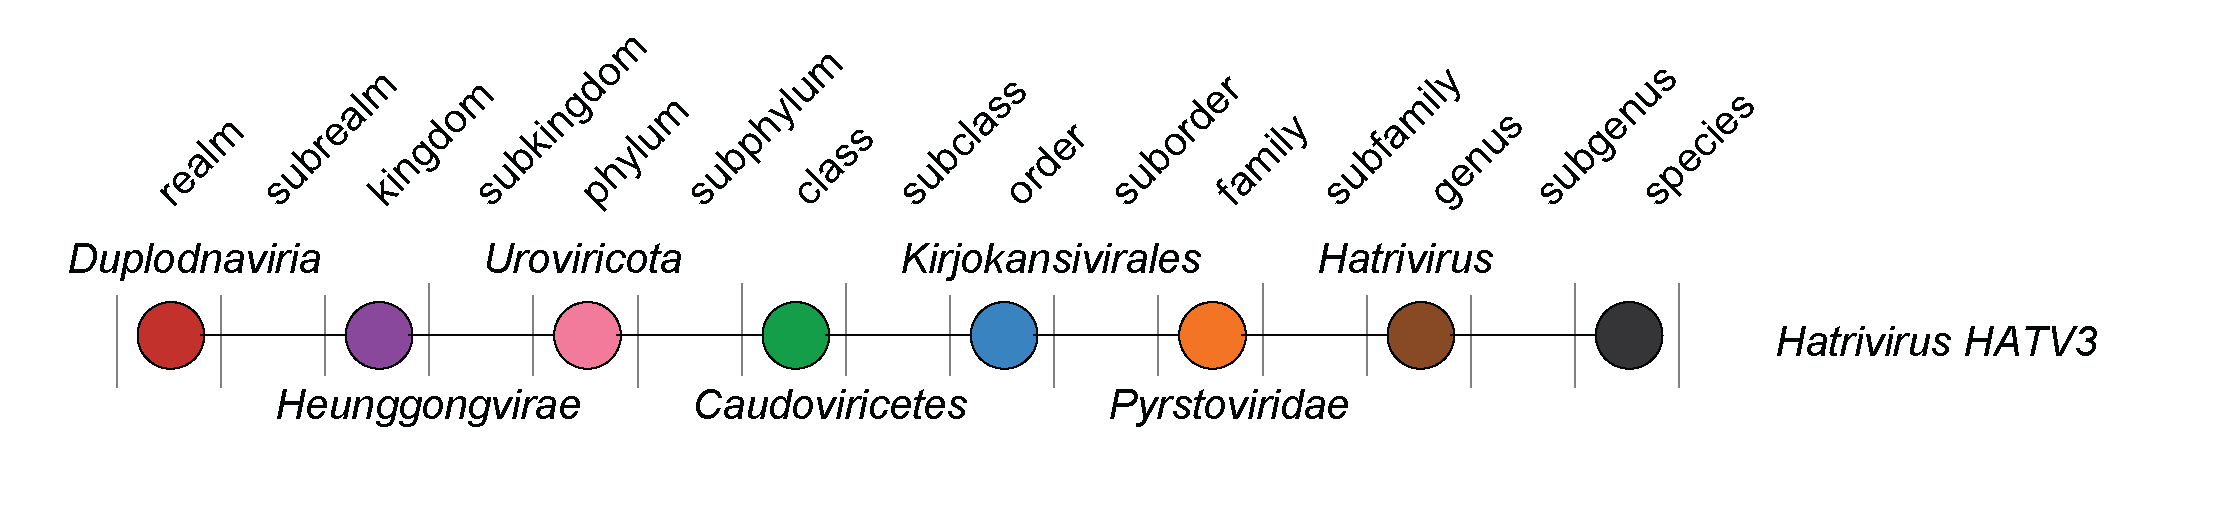 Pyrstoviridae taxonomy